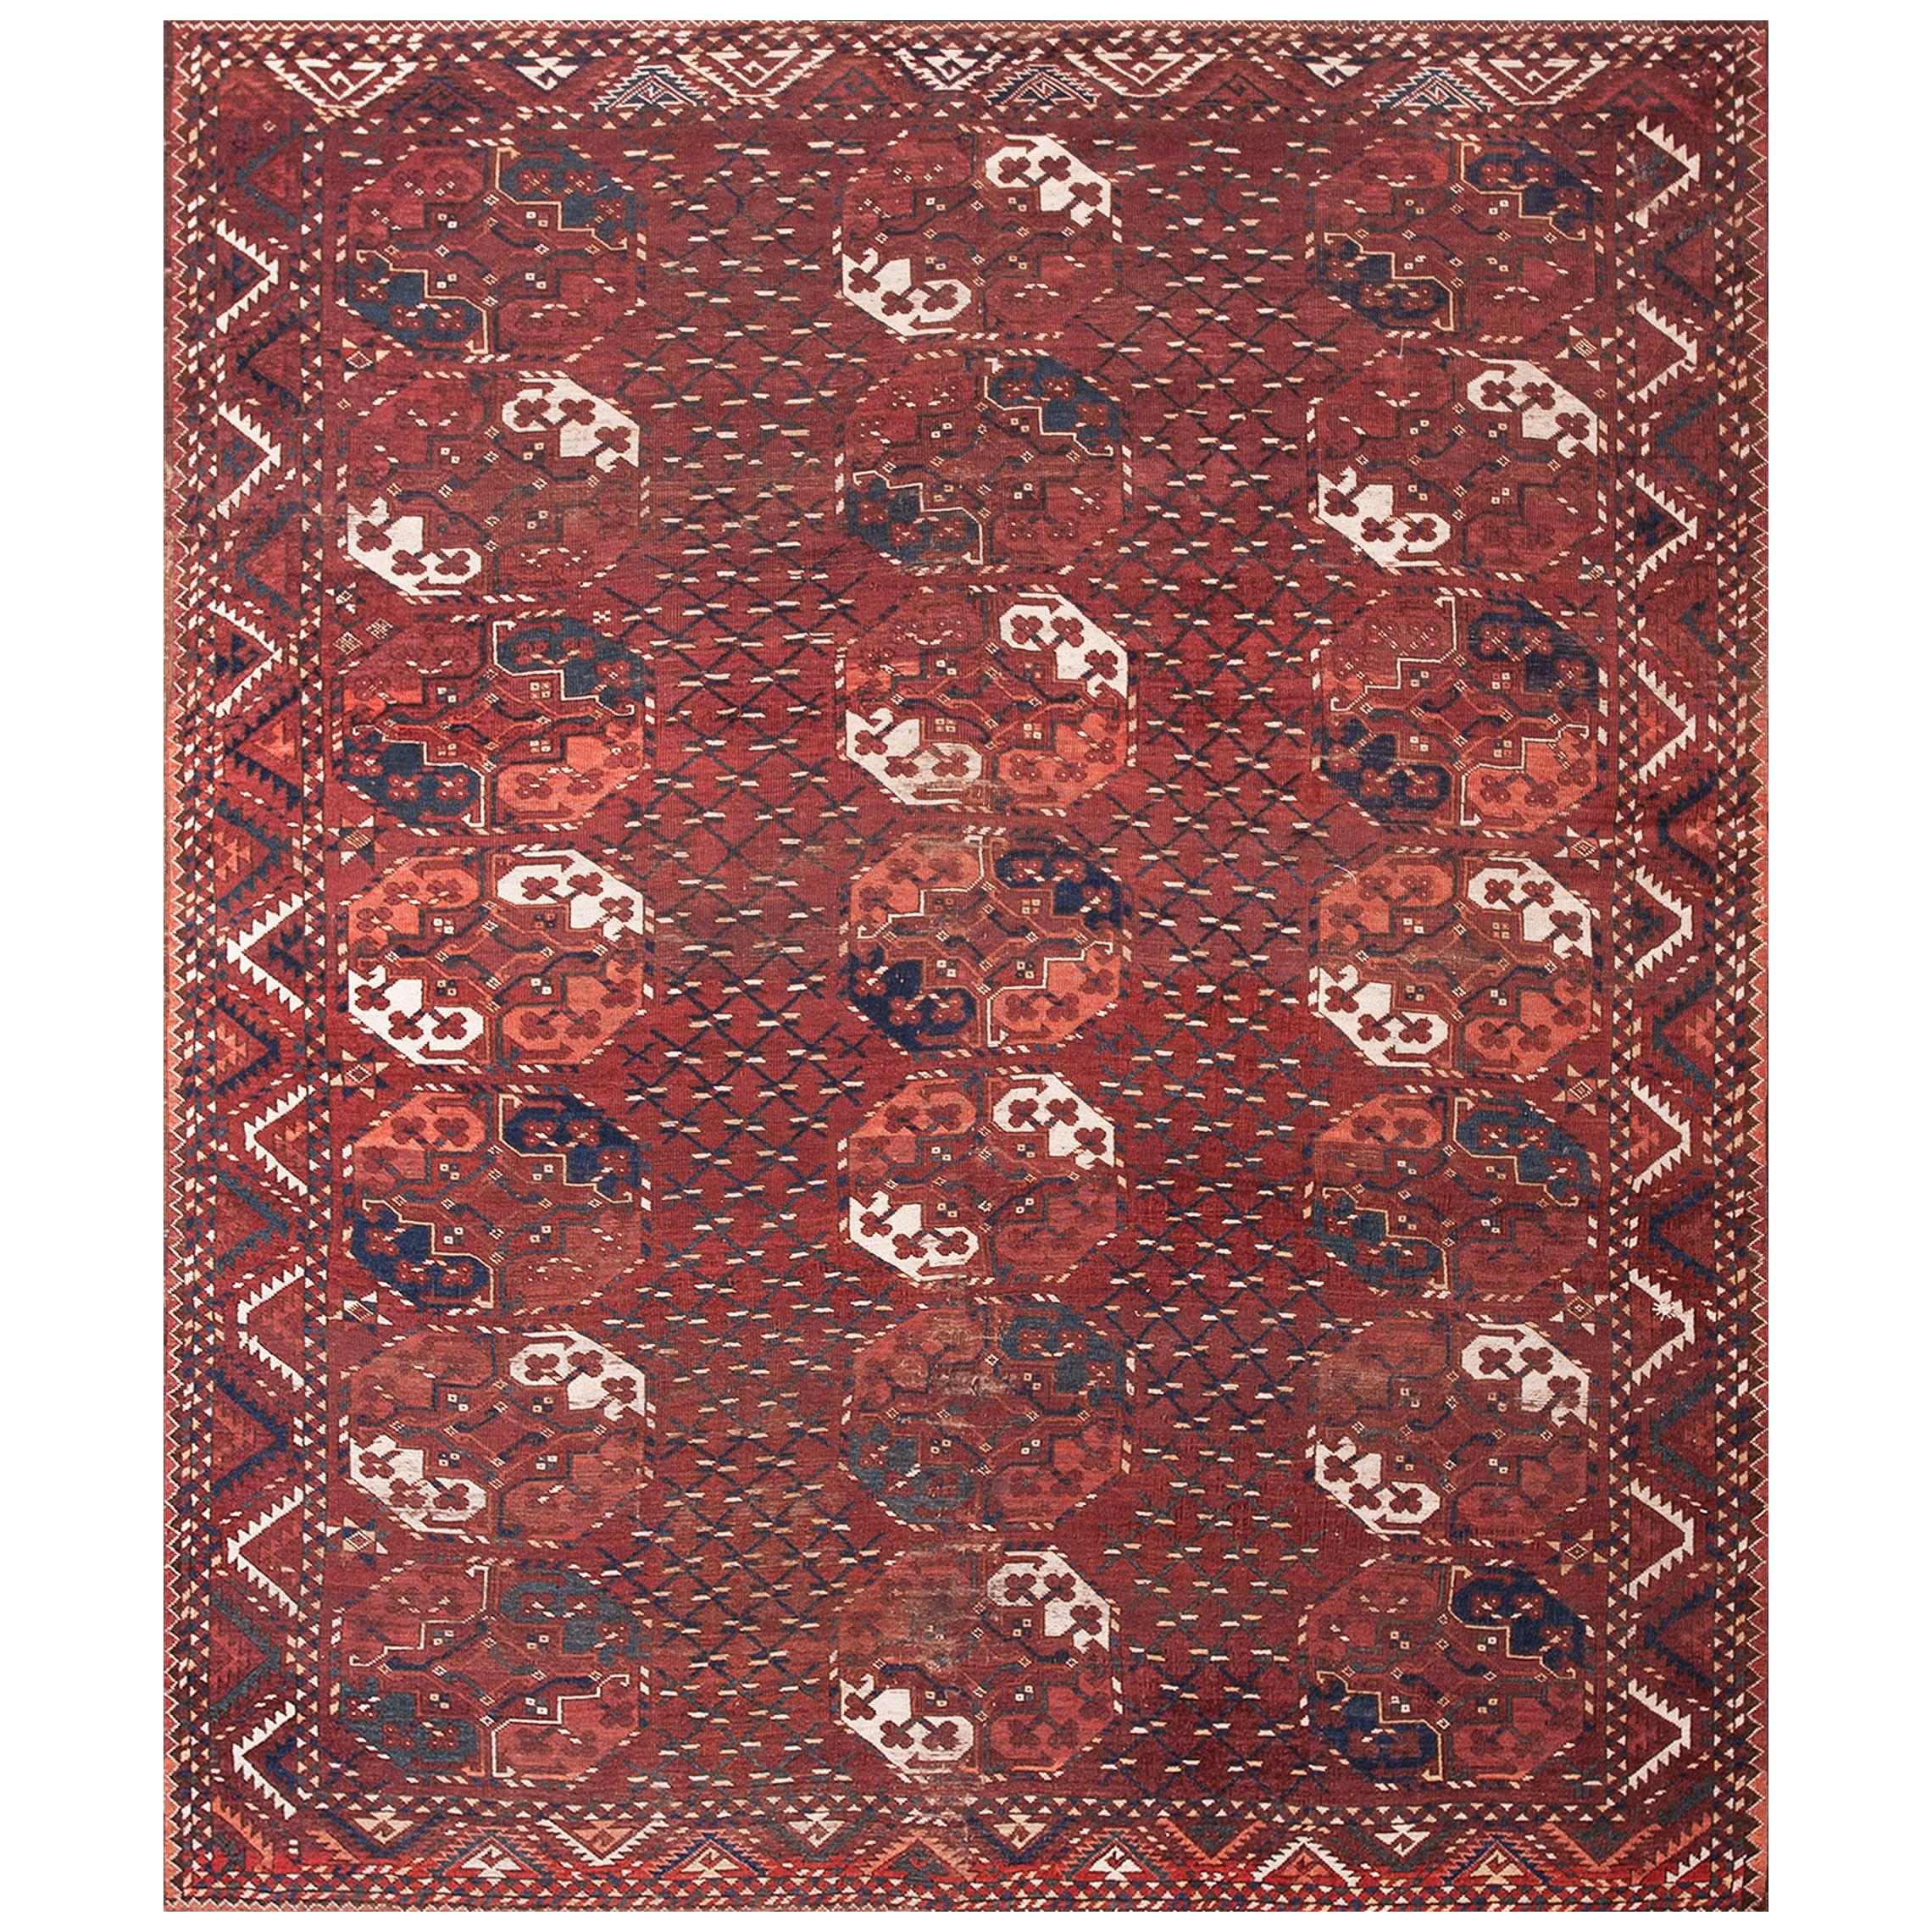 Mid 19th Century Central Asian Ersari - Beshir Main Carpet (6'6" x 8'-198 x 244) For Sale